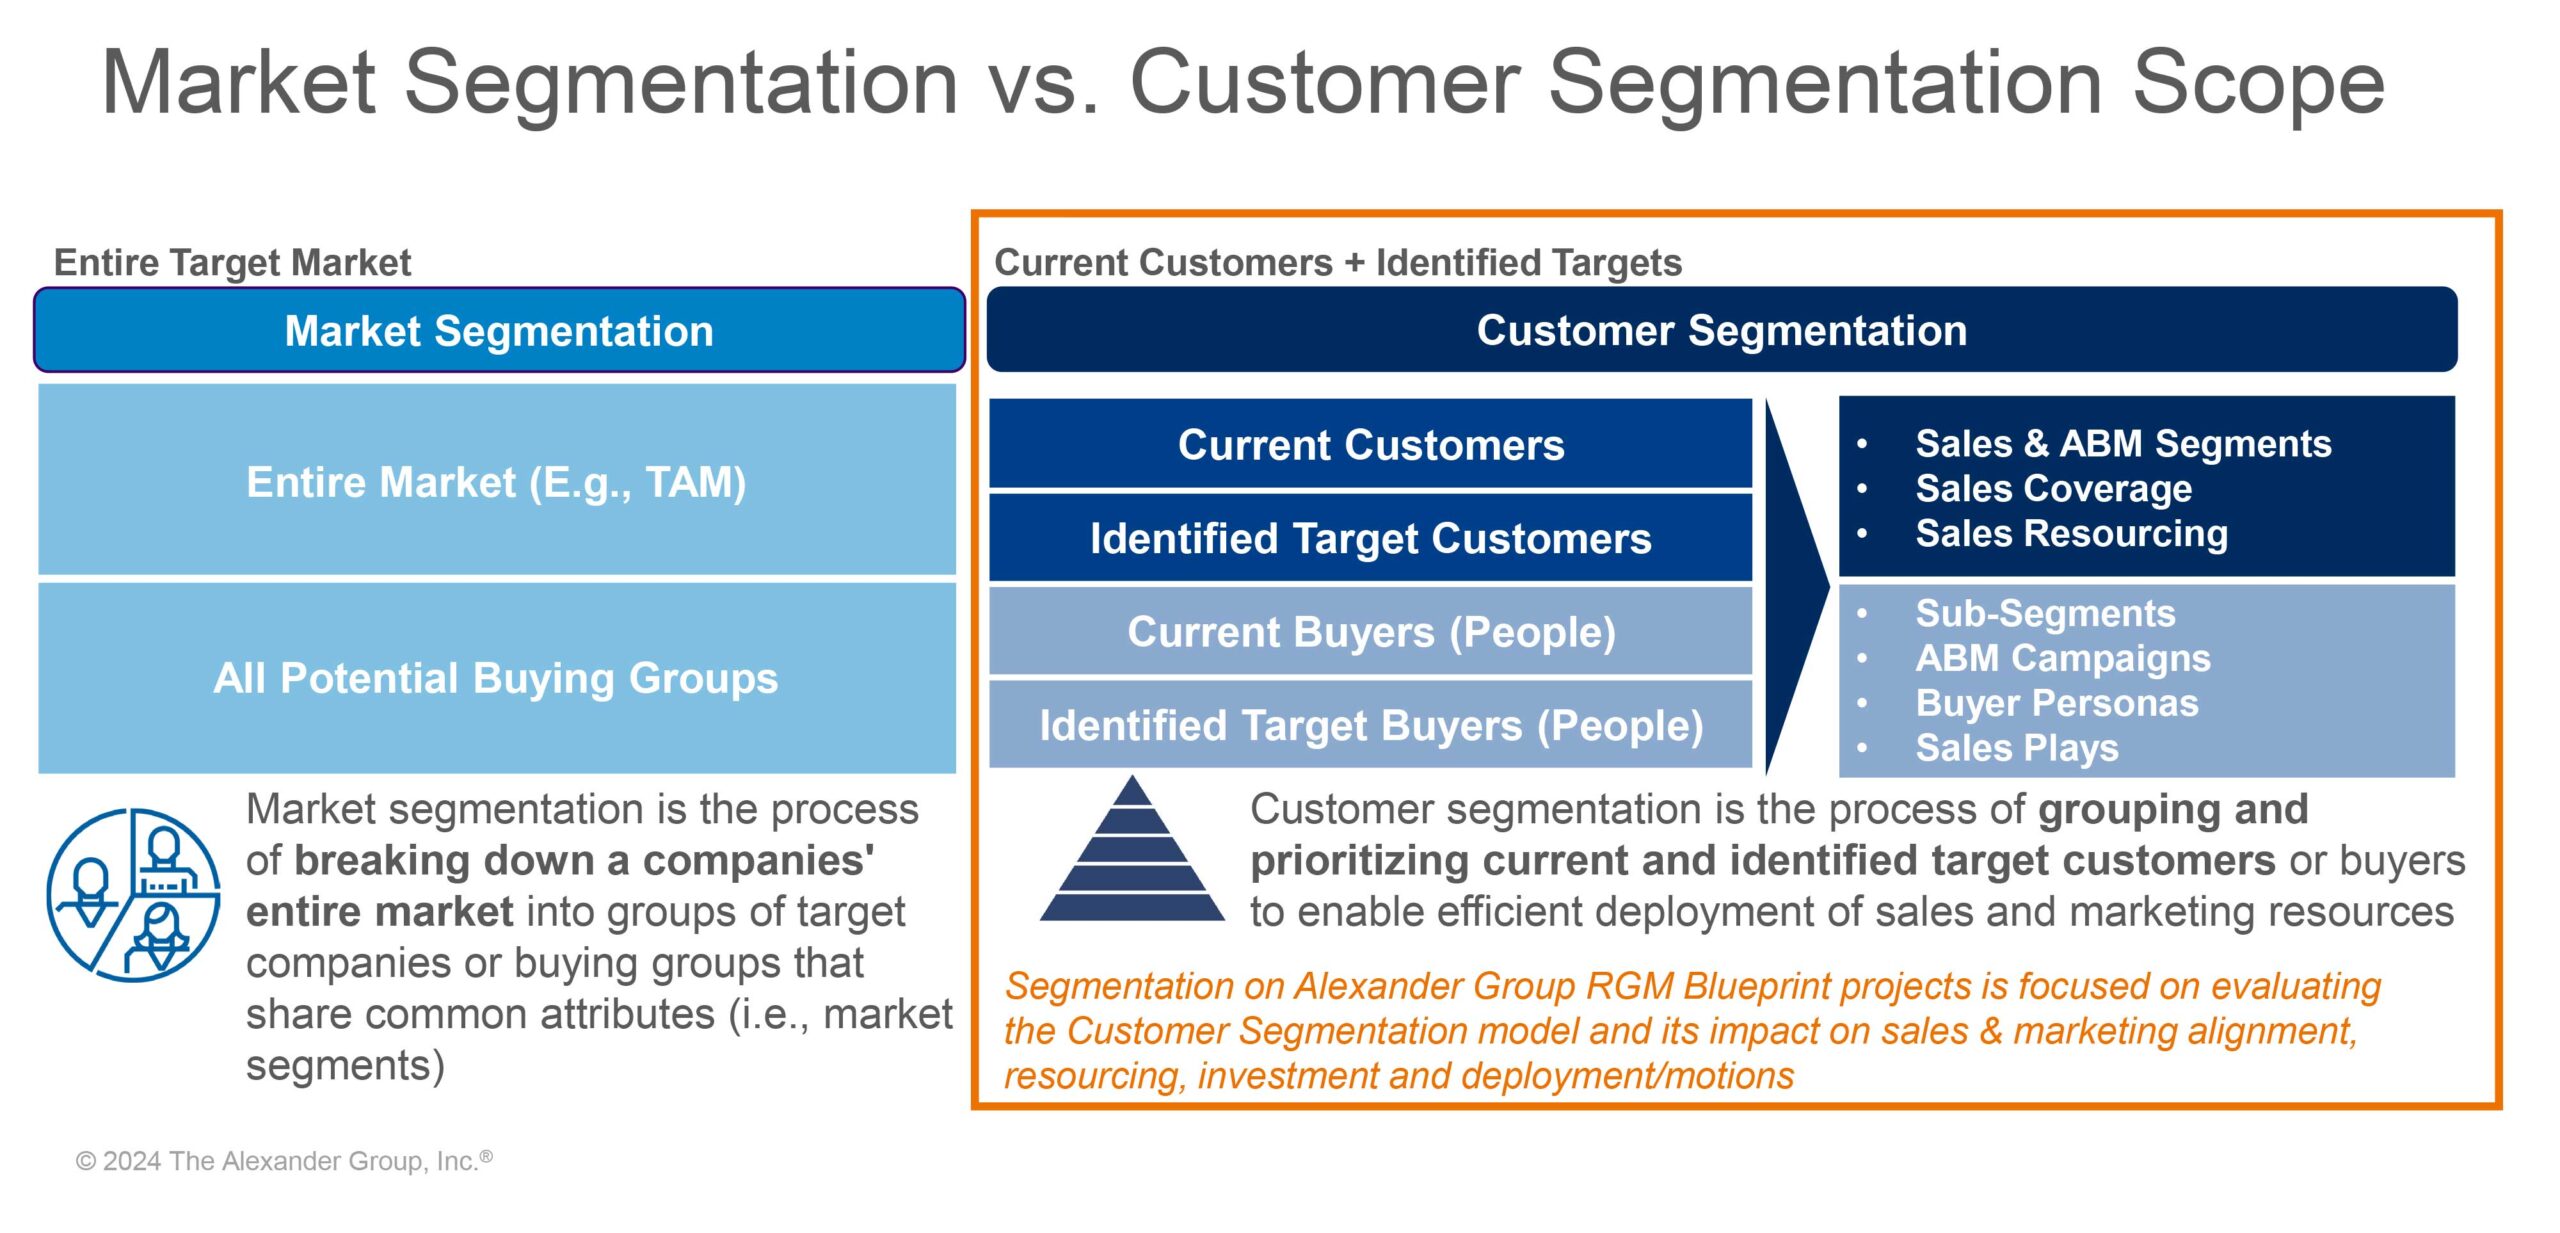 Market Segmentation vs. Customer Segmentation Scope - Alexander Group, Inc.